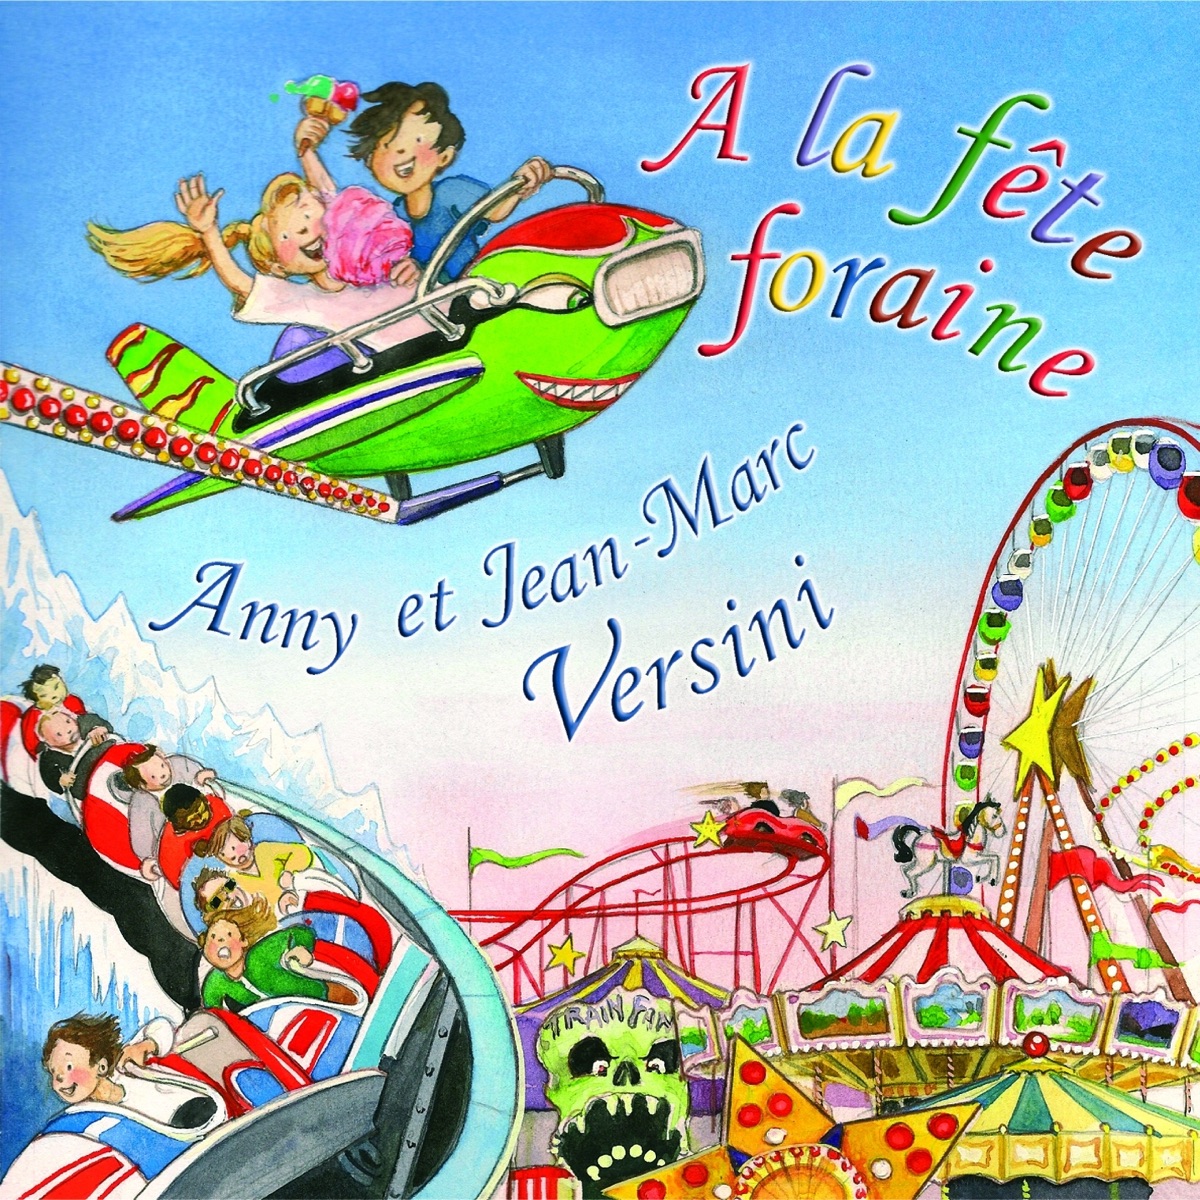 A la fête foraine - Album by Anny Versini & Jean-Marc Versini - Apple Music